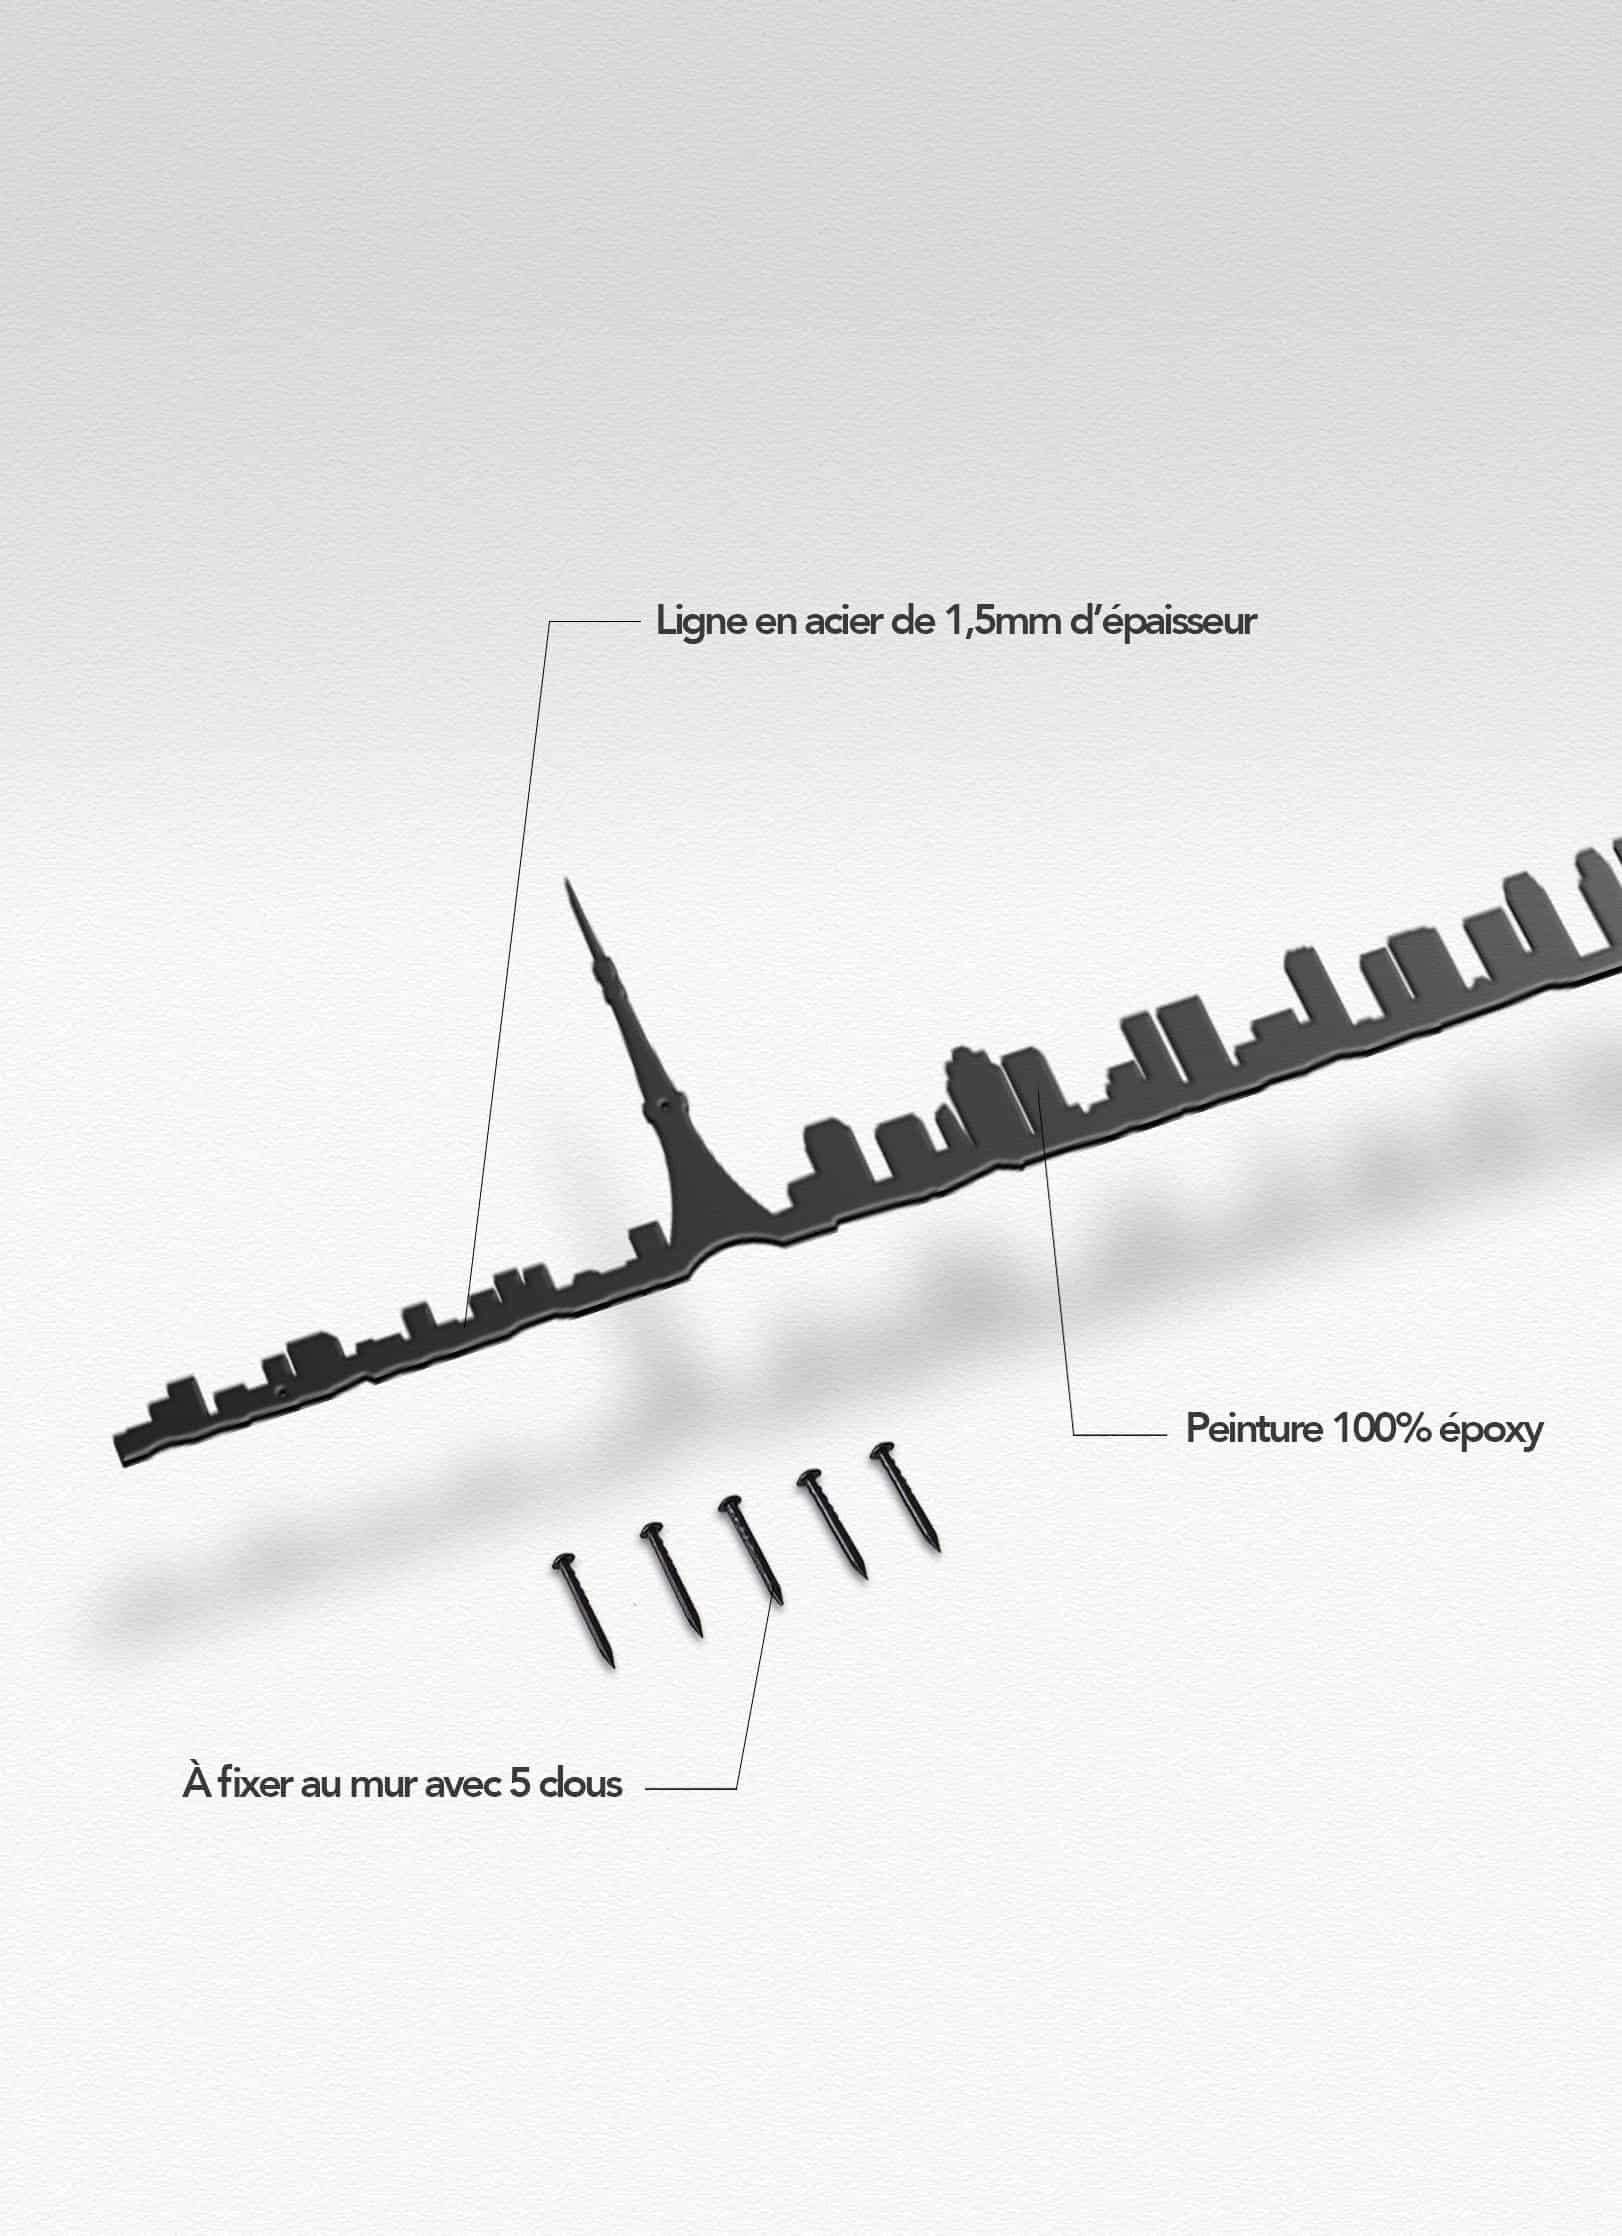 Presentation of the skyline of Tokyo XL